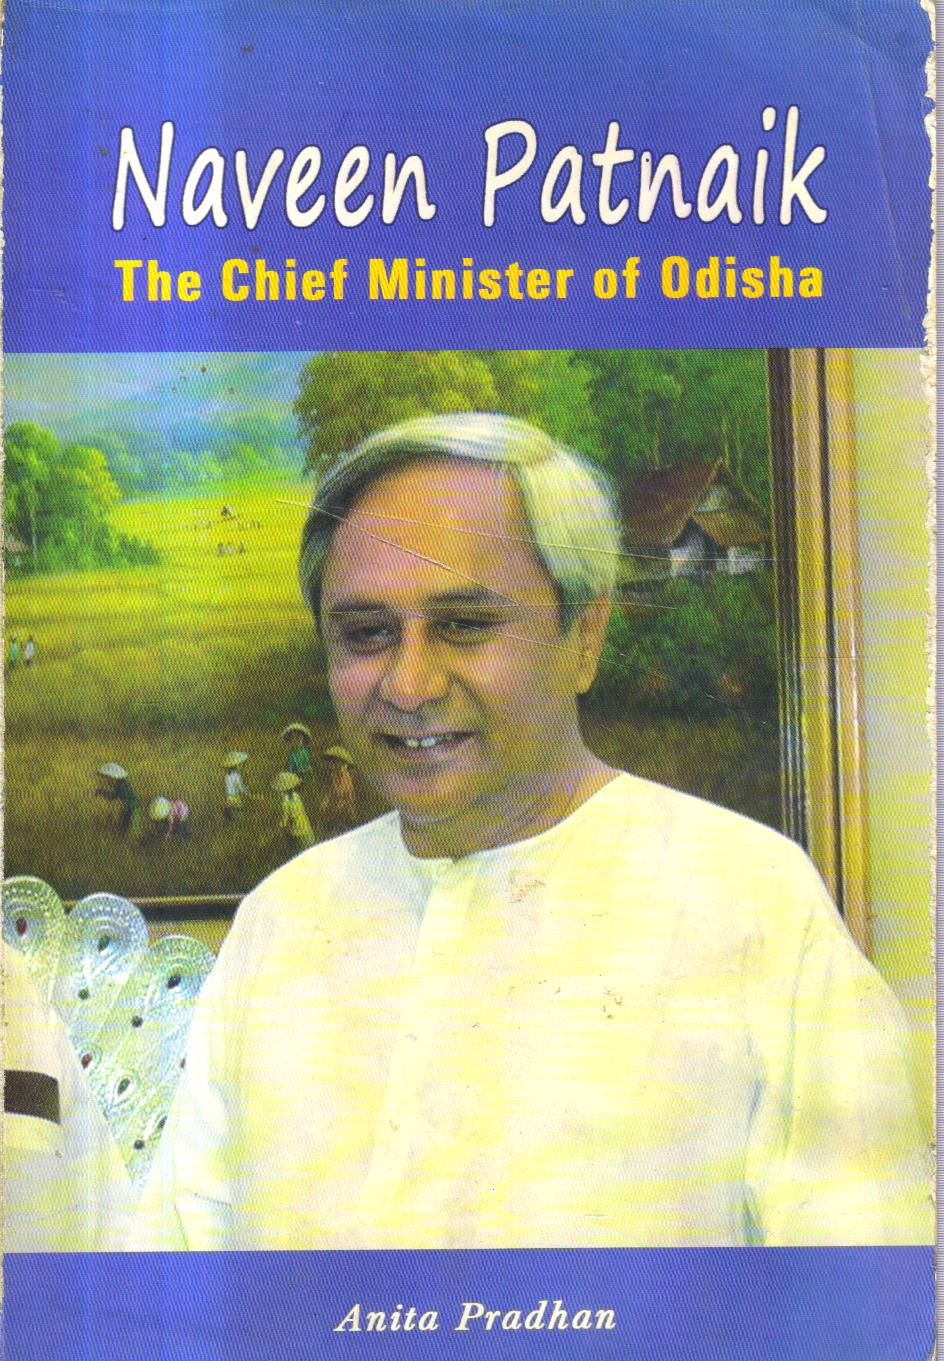 Naveen Patnaik the Cheif Minister of Odisha.